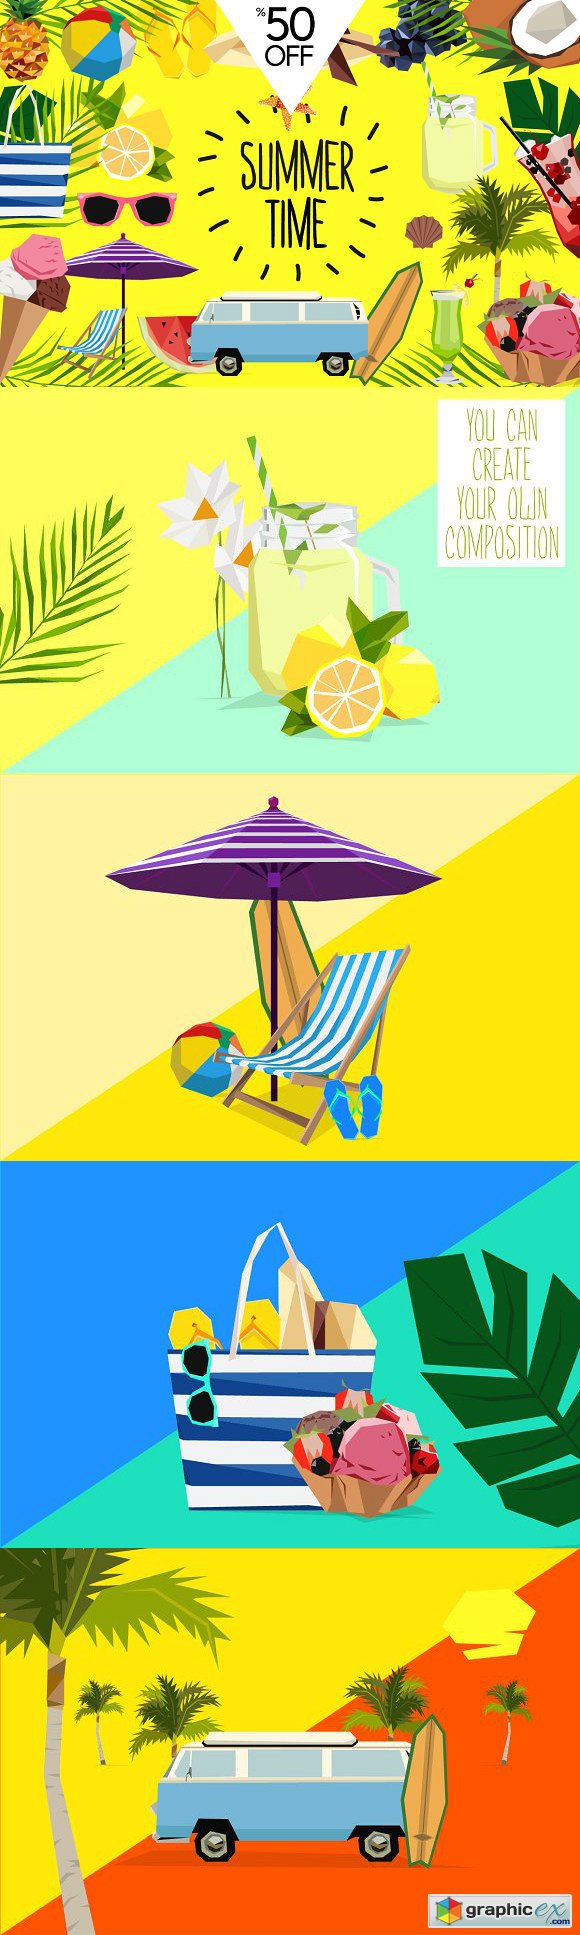 Summer time illustrations